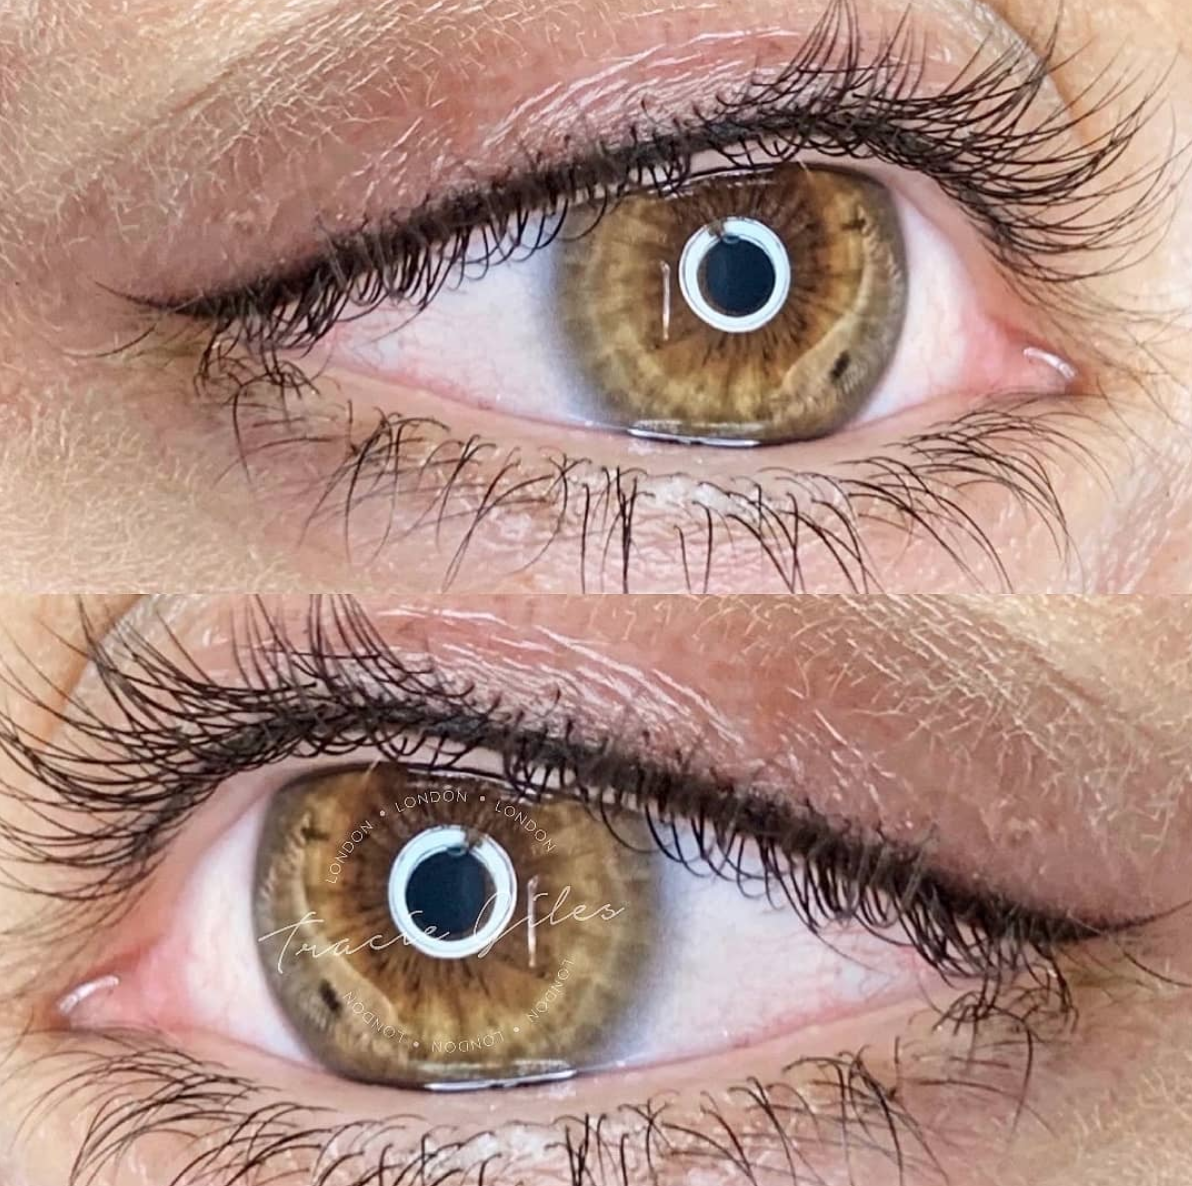 Permanent Eyelash Eyeliner enhancements  Dominique Bossavy